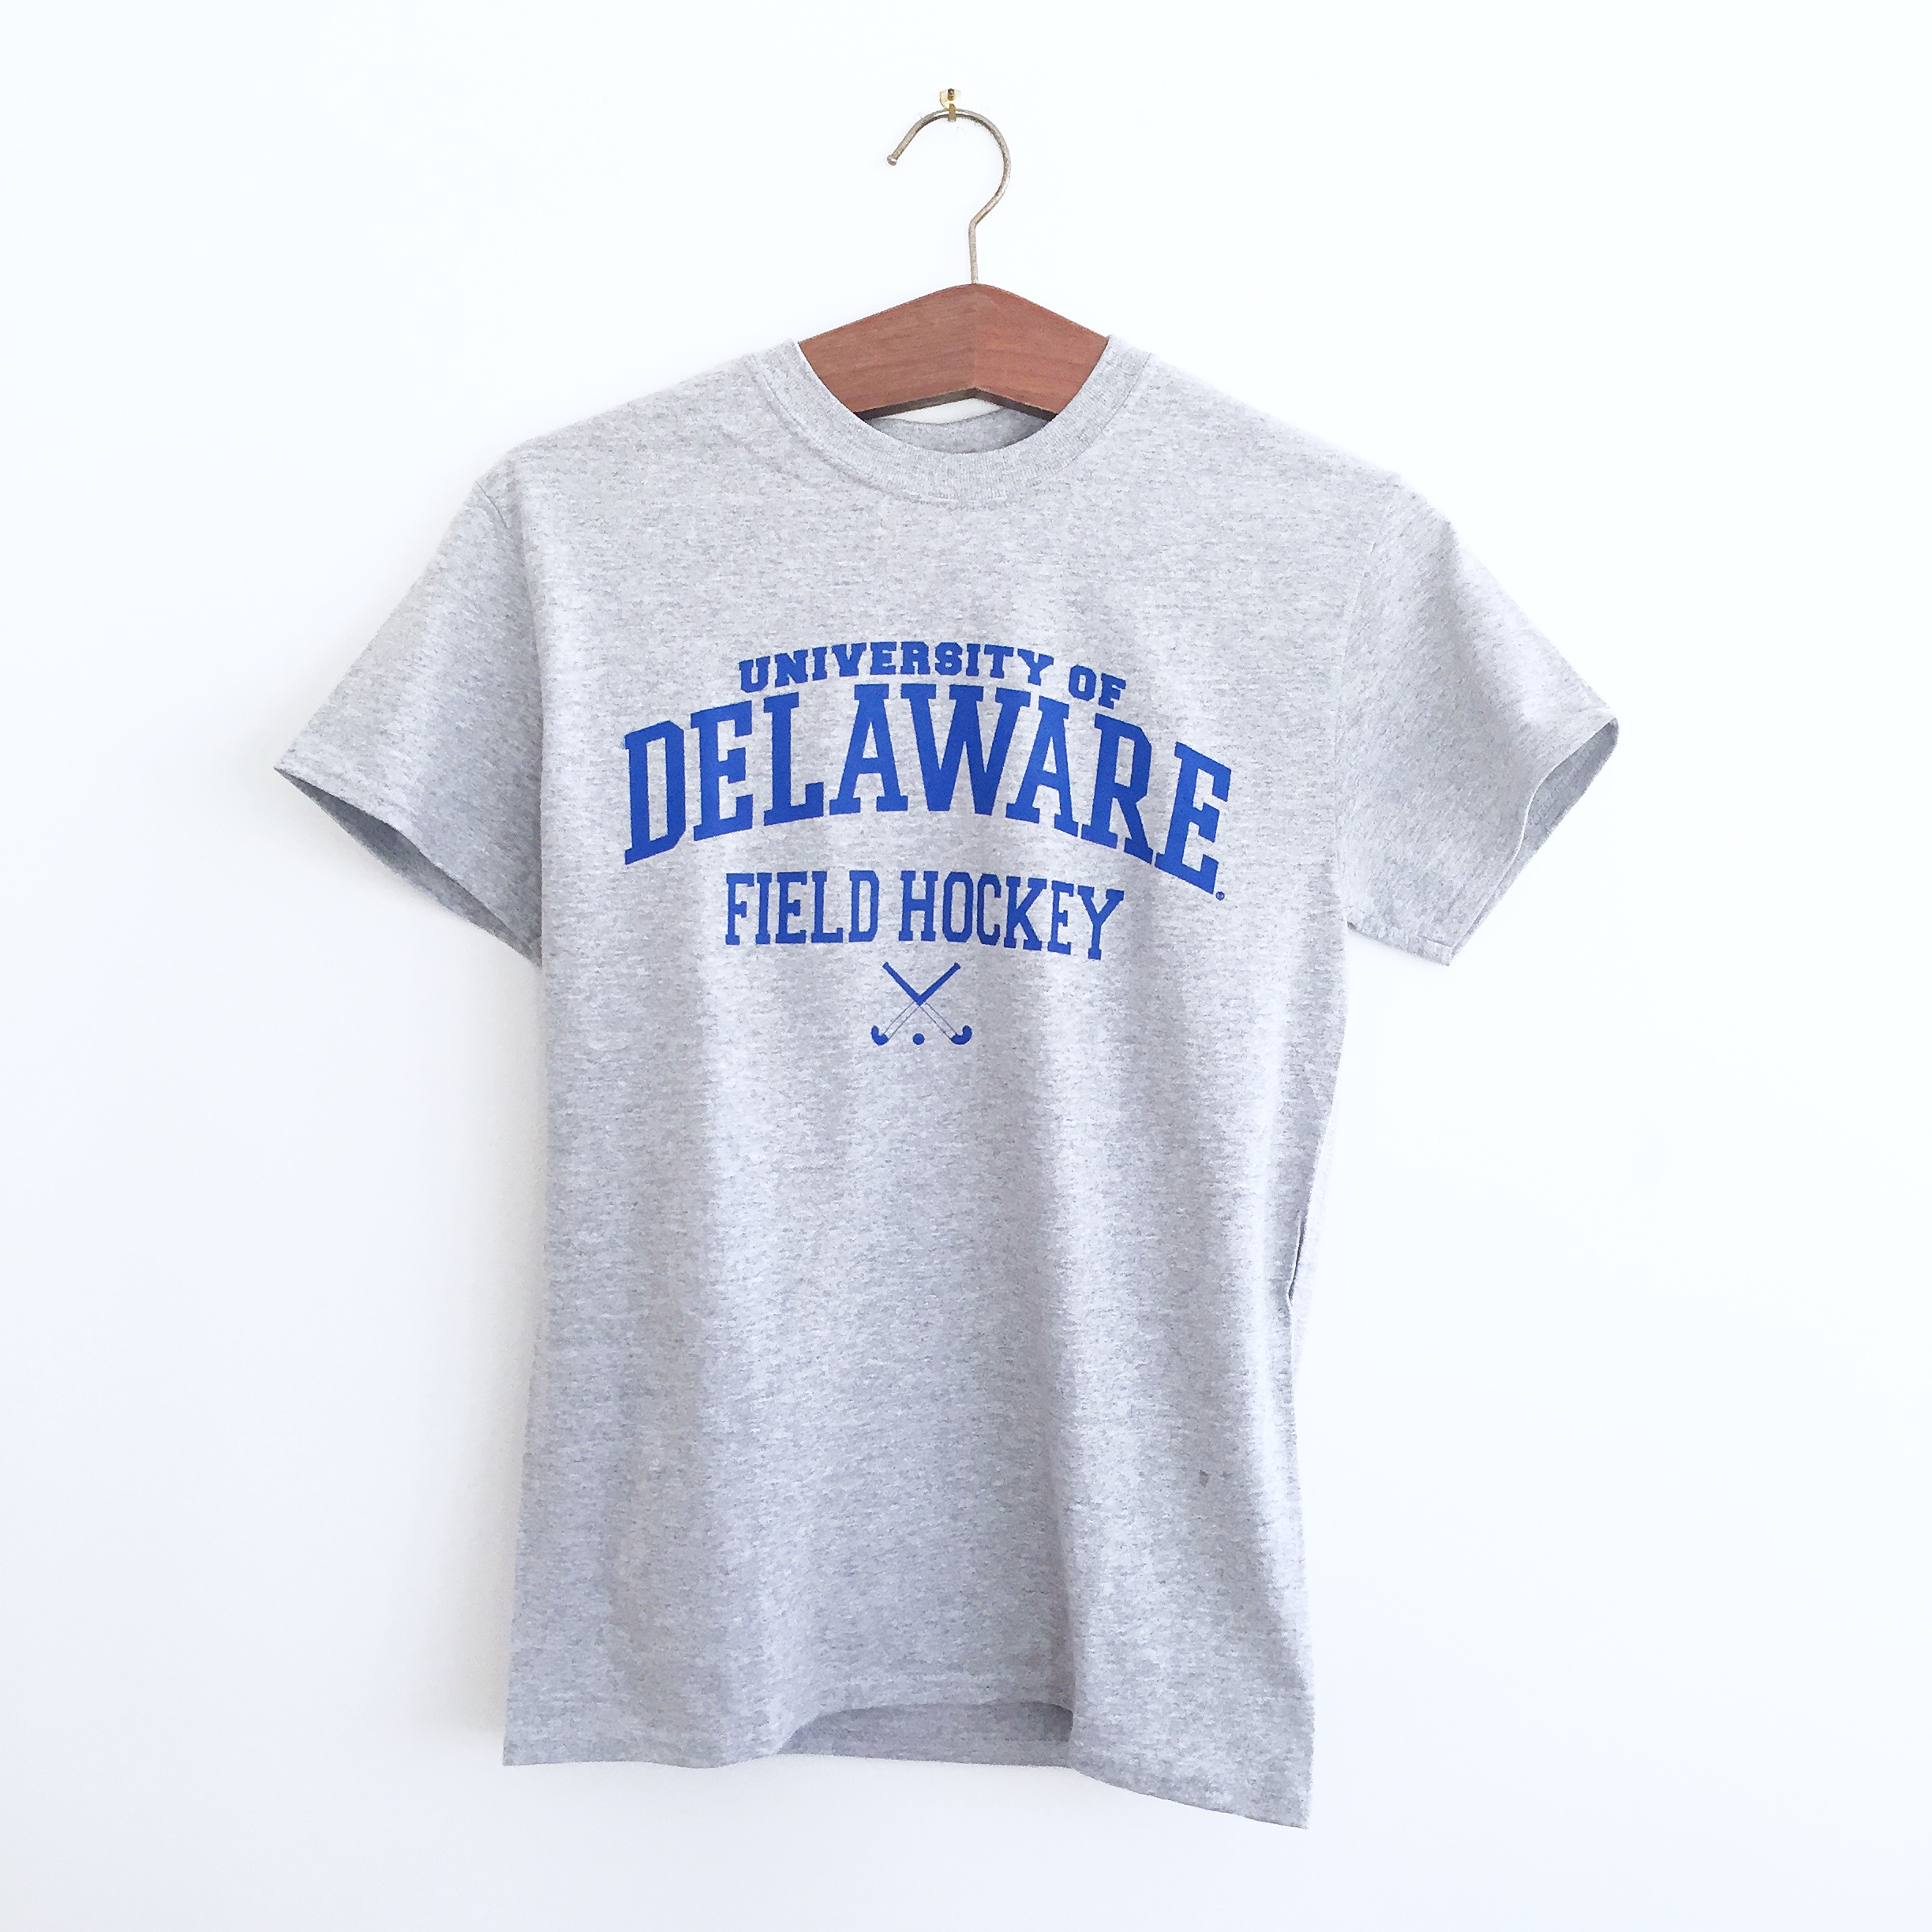 University of Delaware Field Hockey T-shirt - Oxford